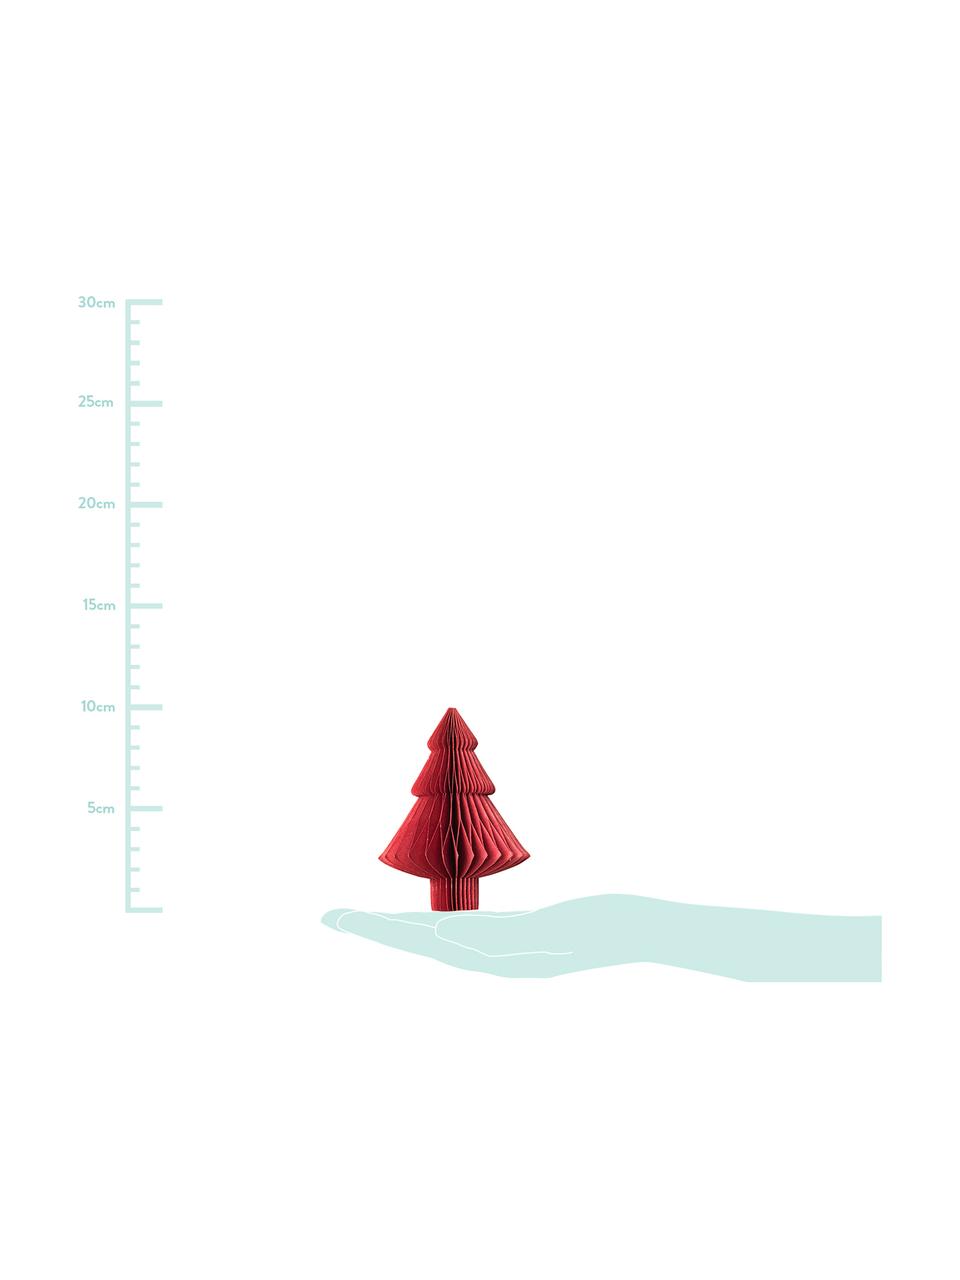 Sada ozdob na stromeček Christmas-Mix, 4 díly, Cihlová červená